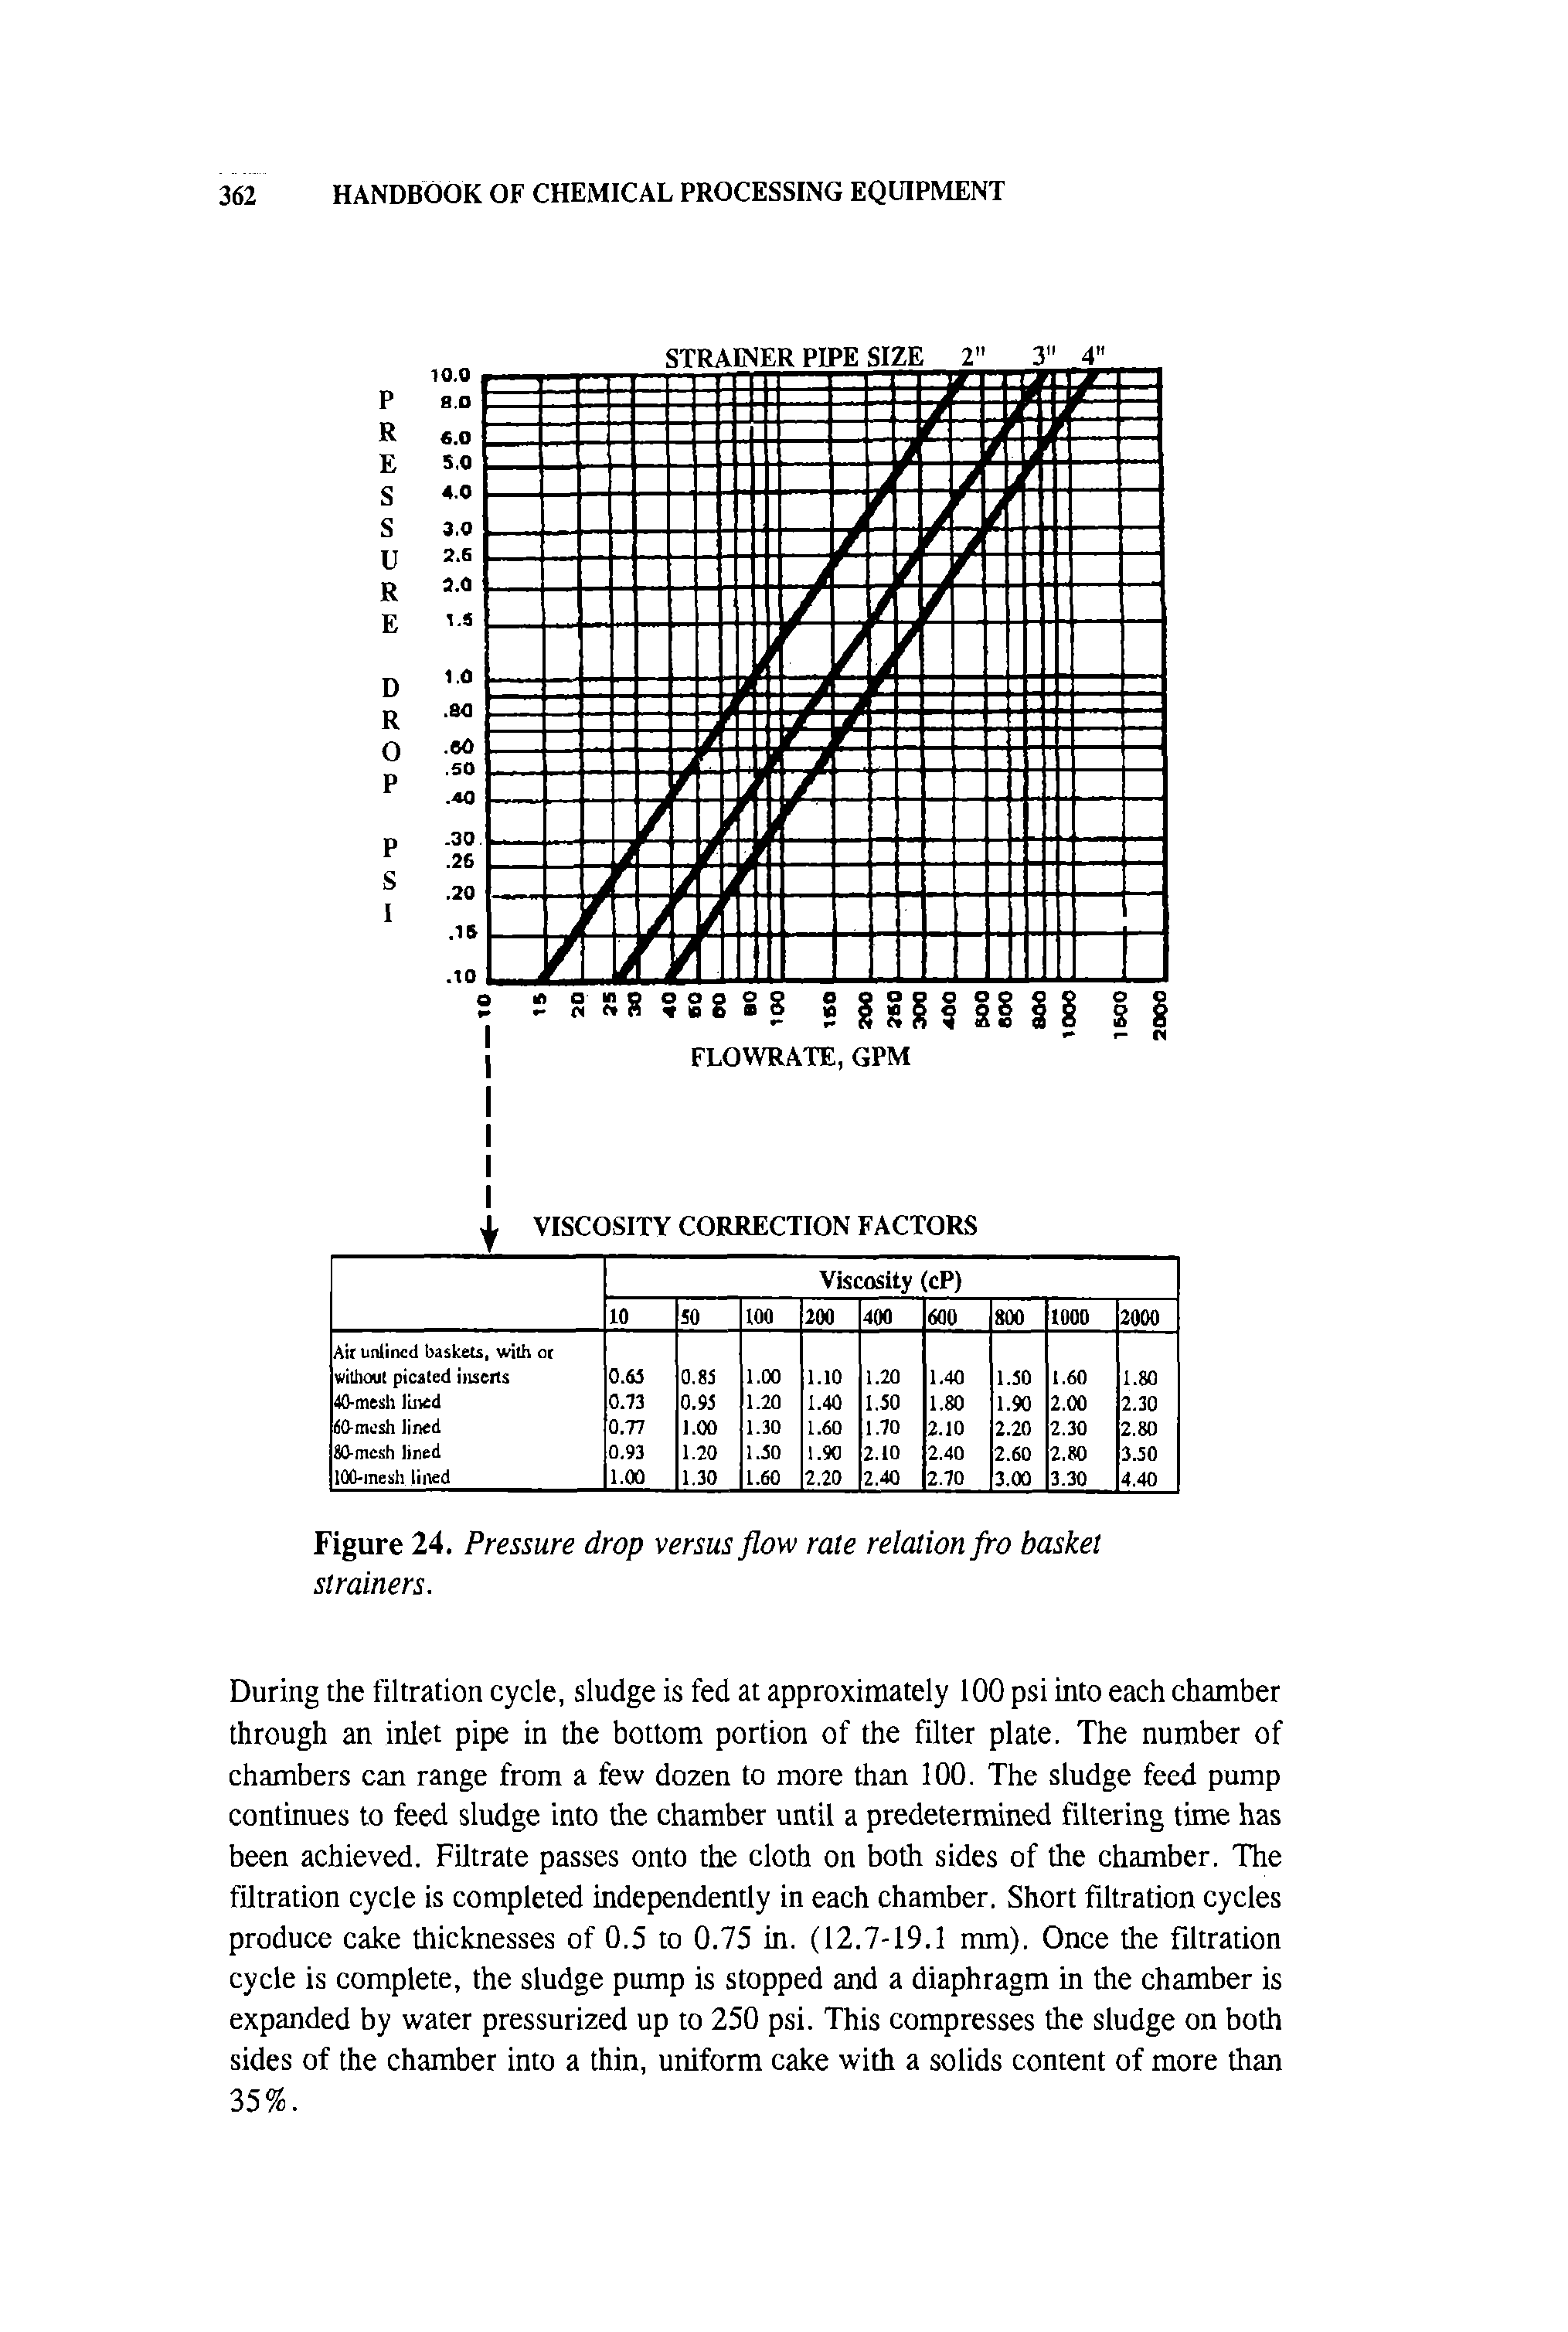 Figure 24. Pressure drop versus flow rate relation fro basket strainers.